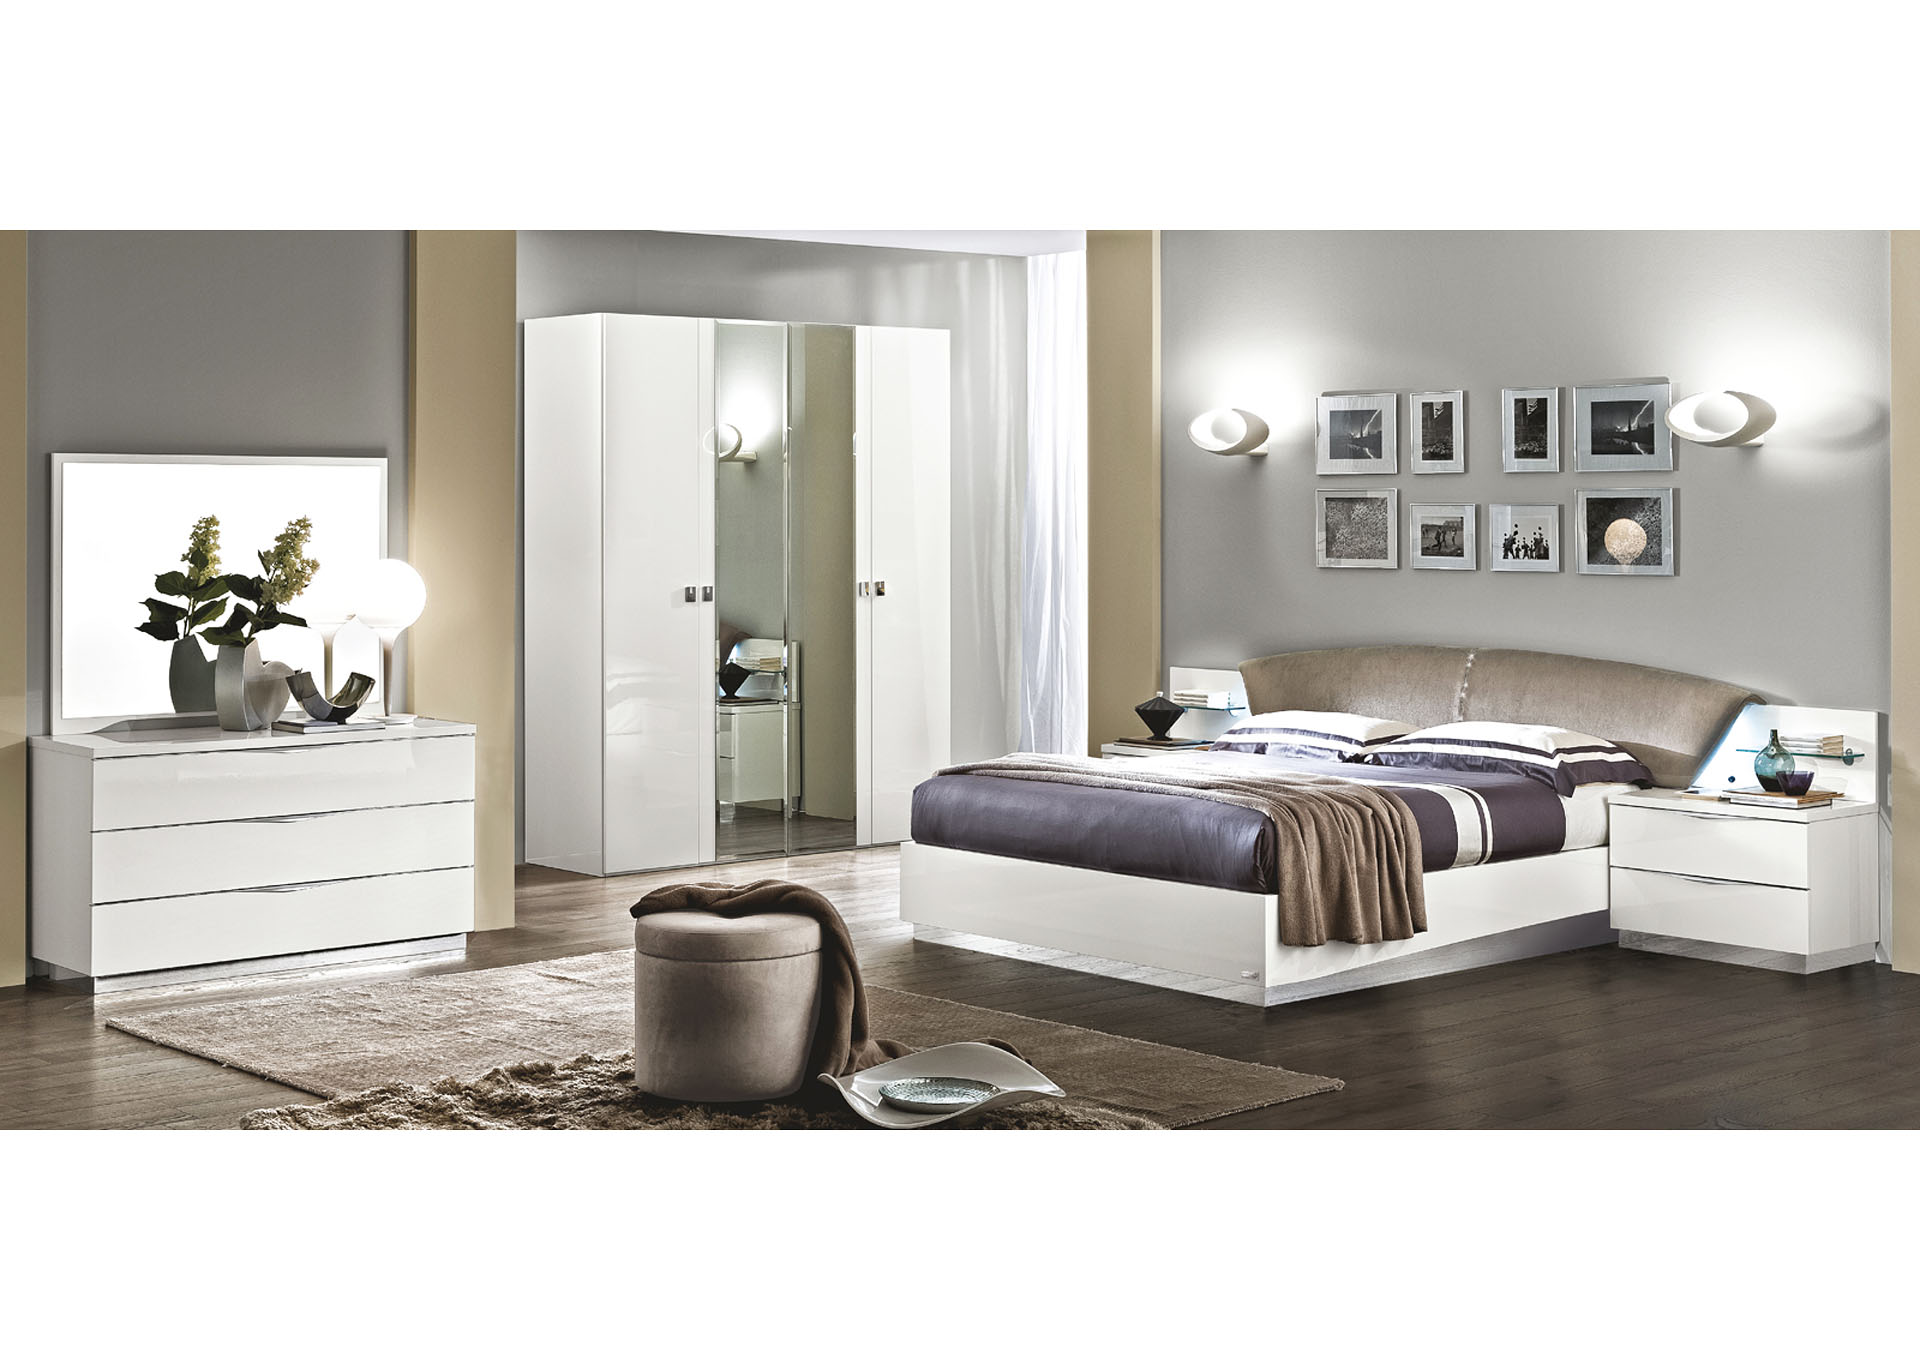 Onda Beige & White Standard Frame King Bed W/ Dresser & Mirror,ESF Wholesale Furniture